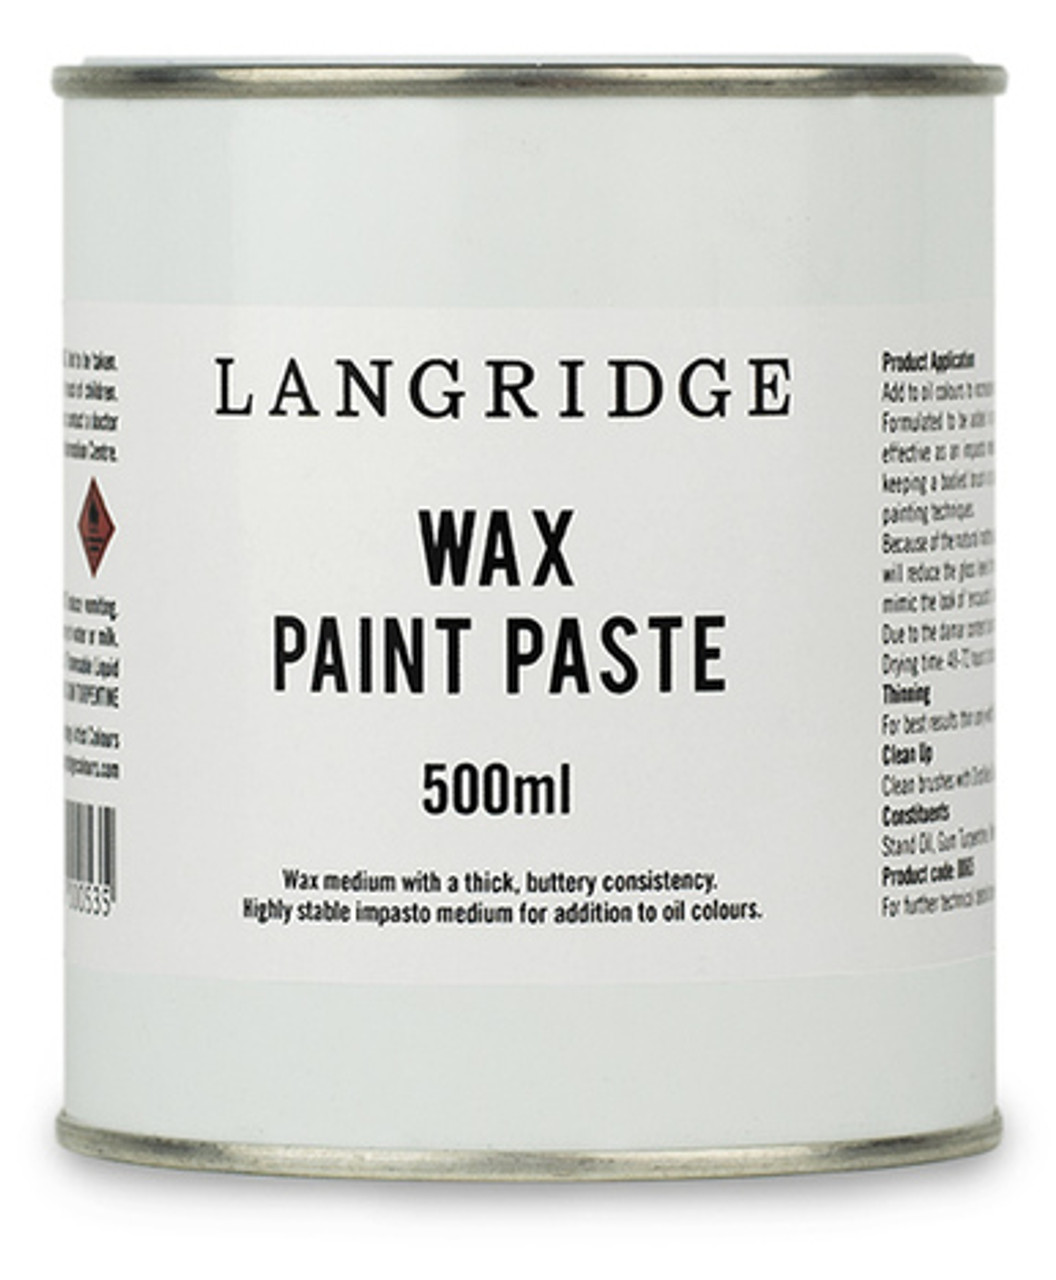 Langridge-Wax Painting Paste 500ml